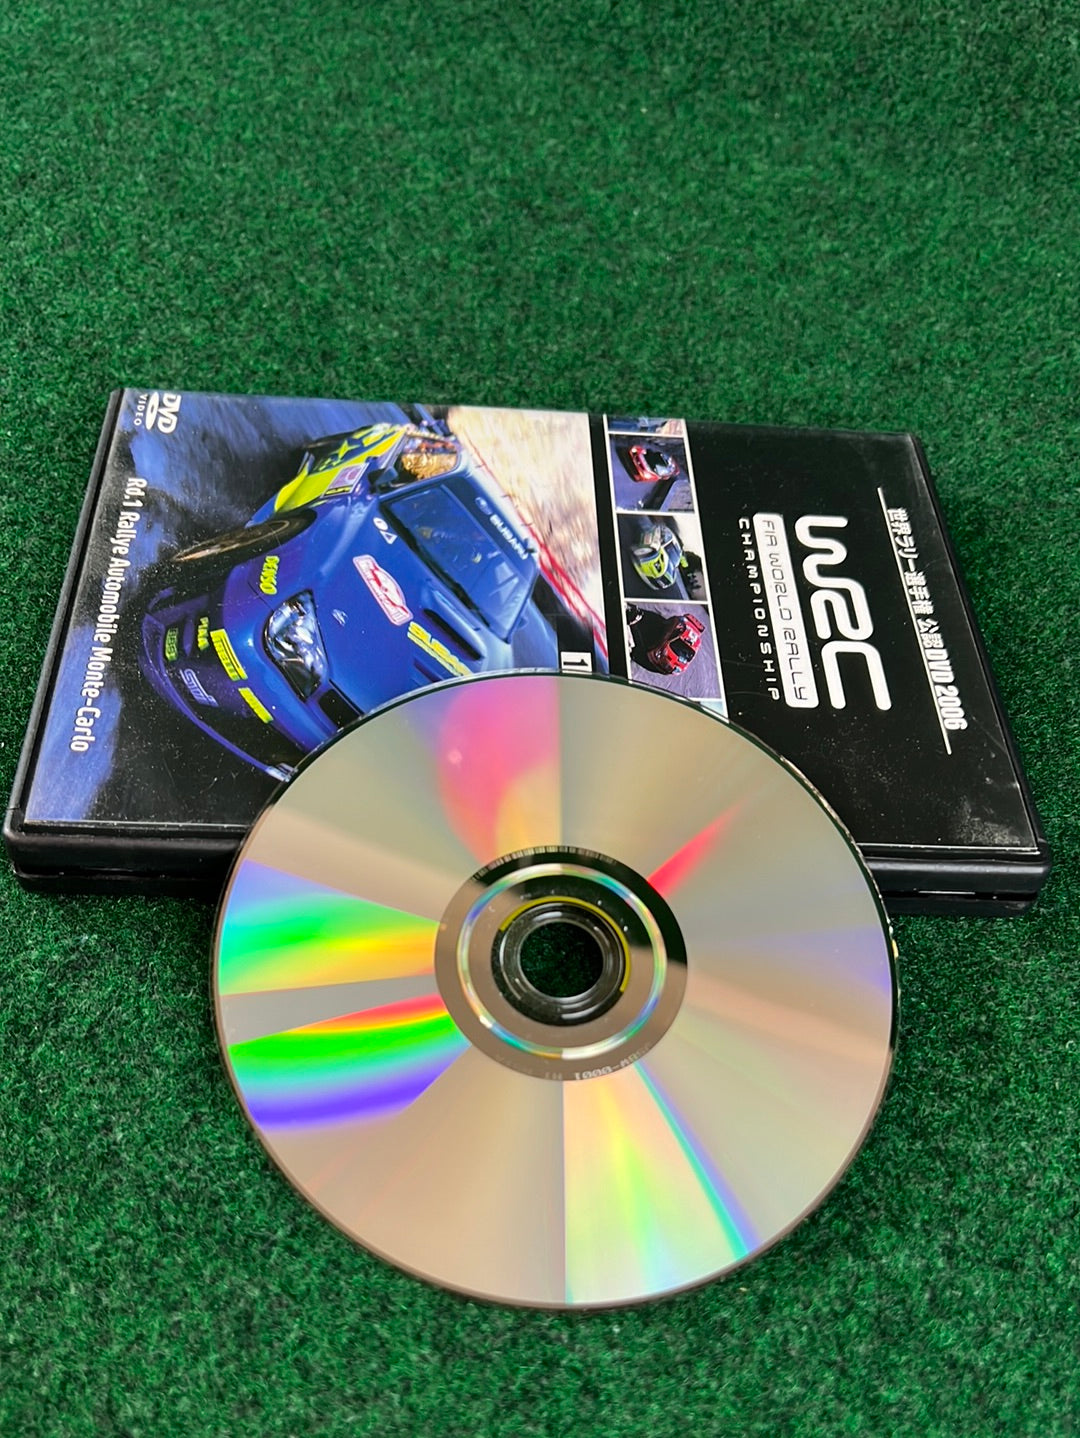 WRC DVD - World Rally Championship 2006 Round 1 & 2 Set